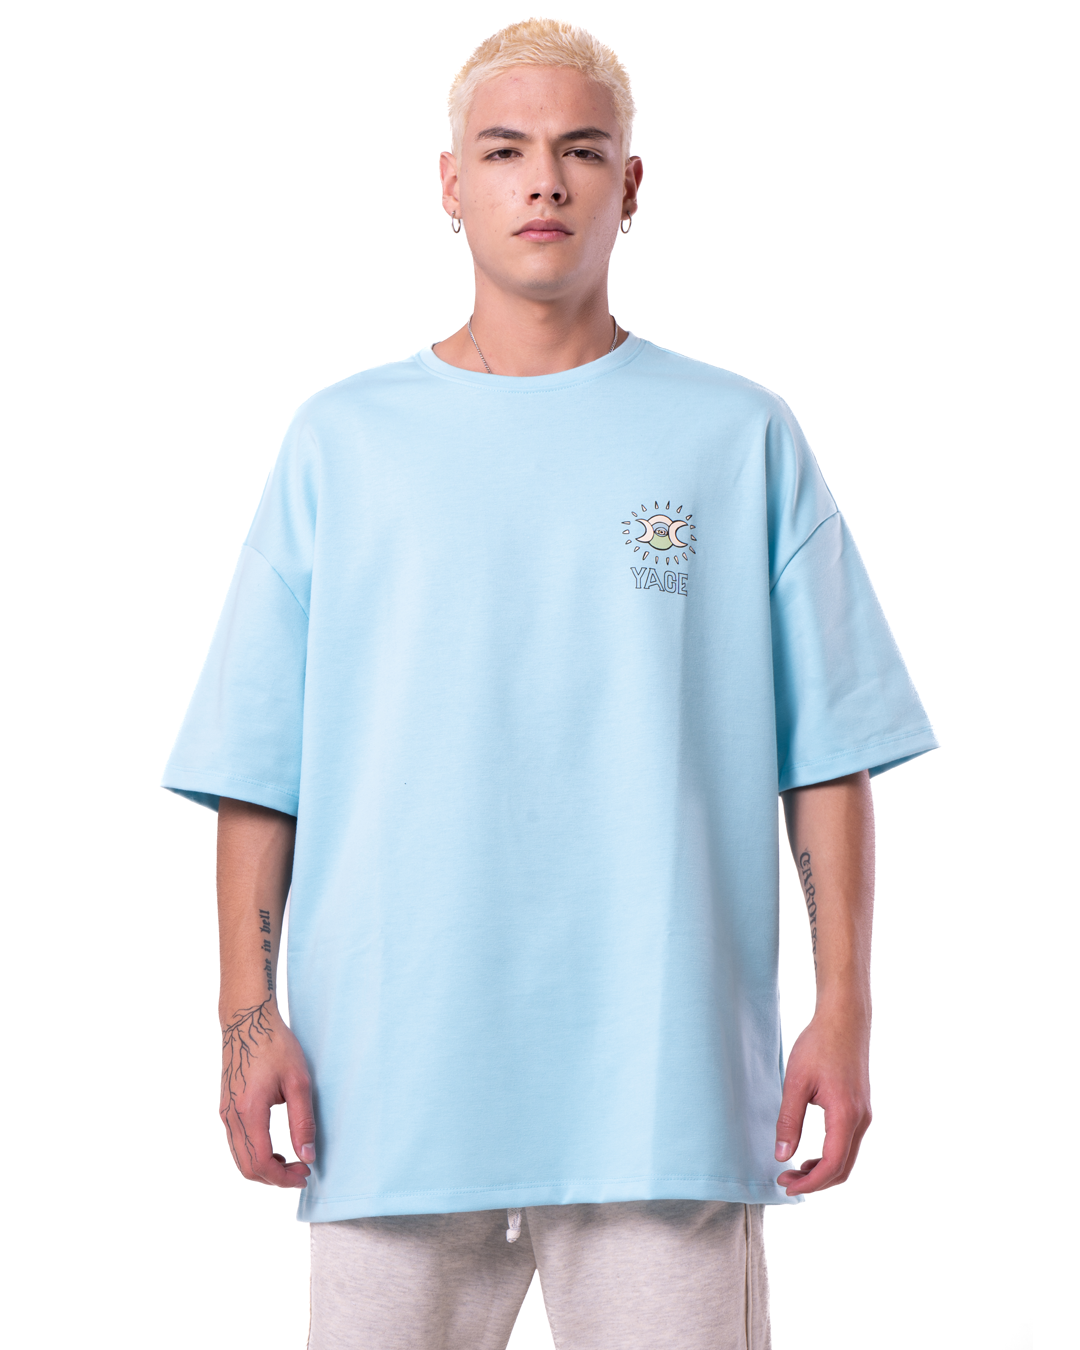 Moda US – Oversize Yage Spiritual T-shirt